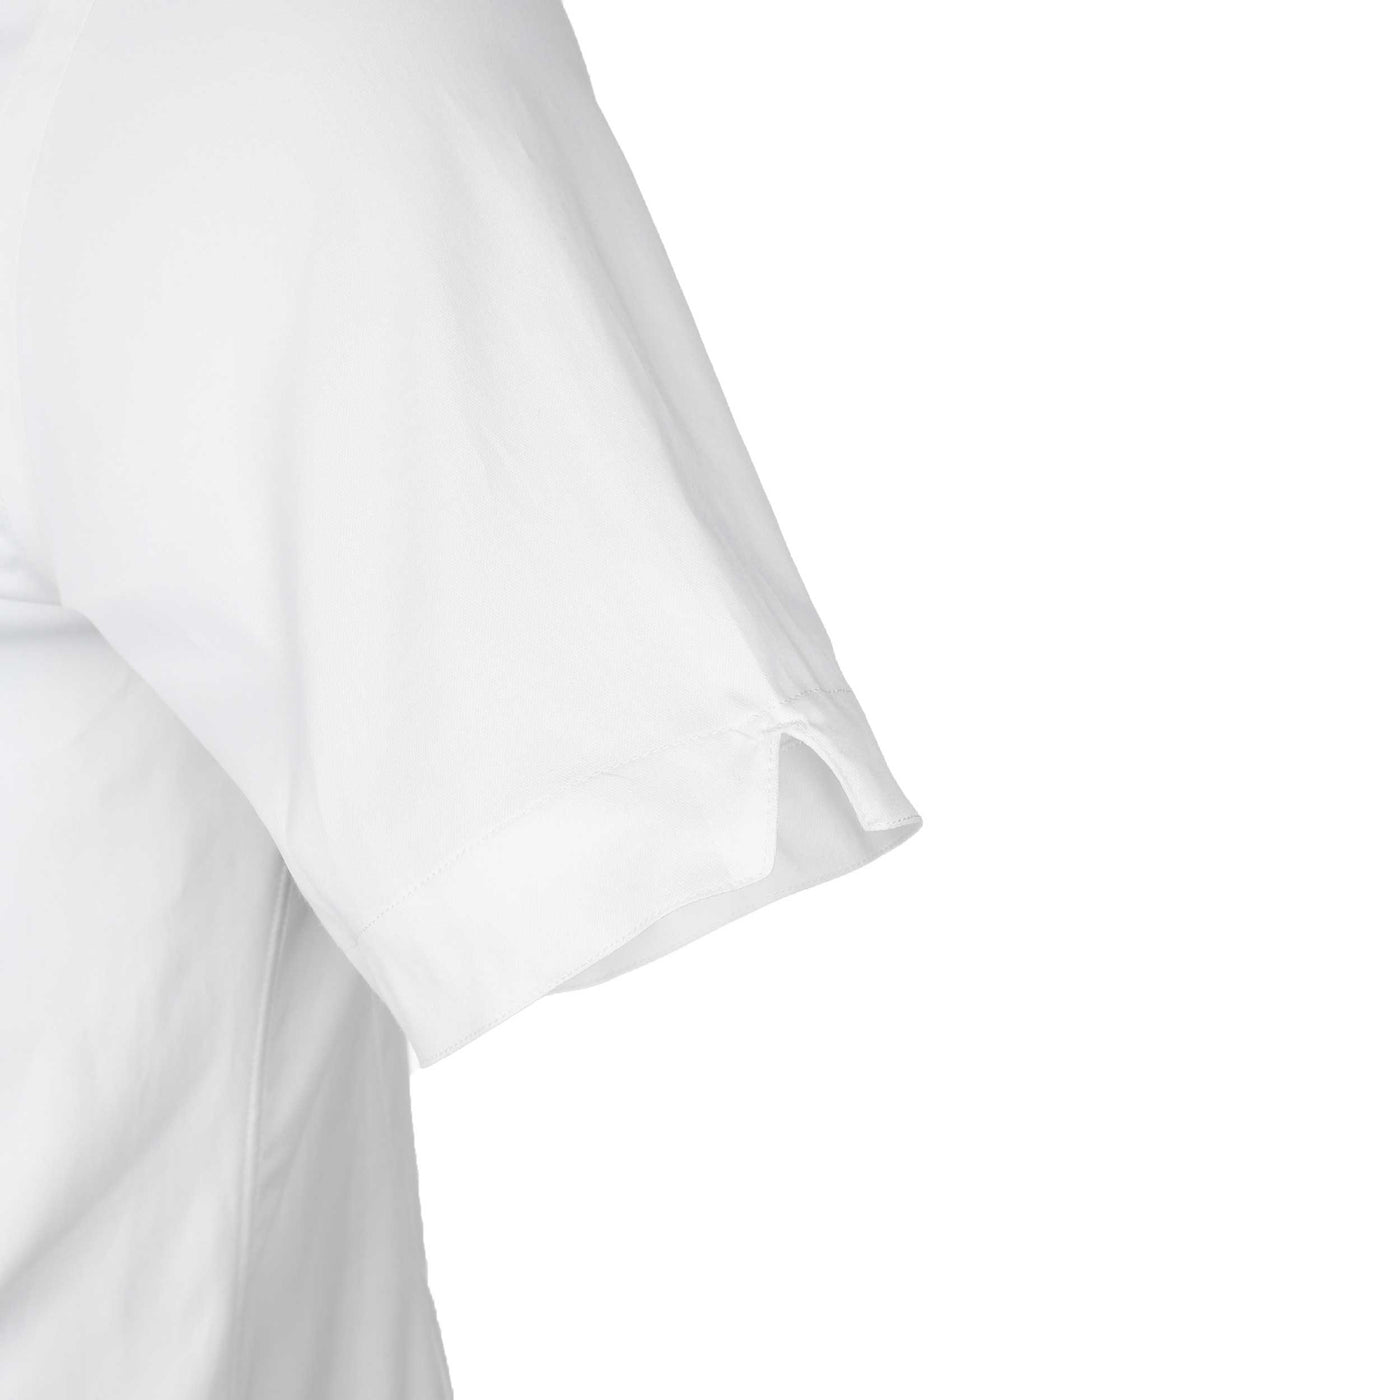 Remus Uomo 2 Way Stretch SS Shirt in White Sleeve